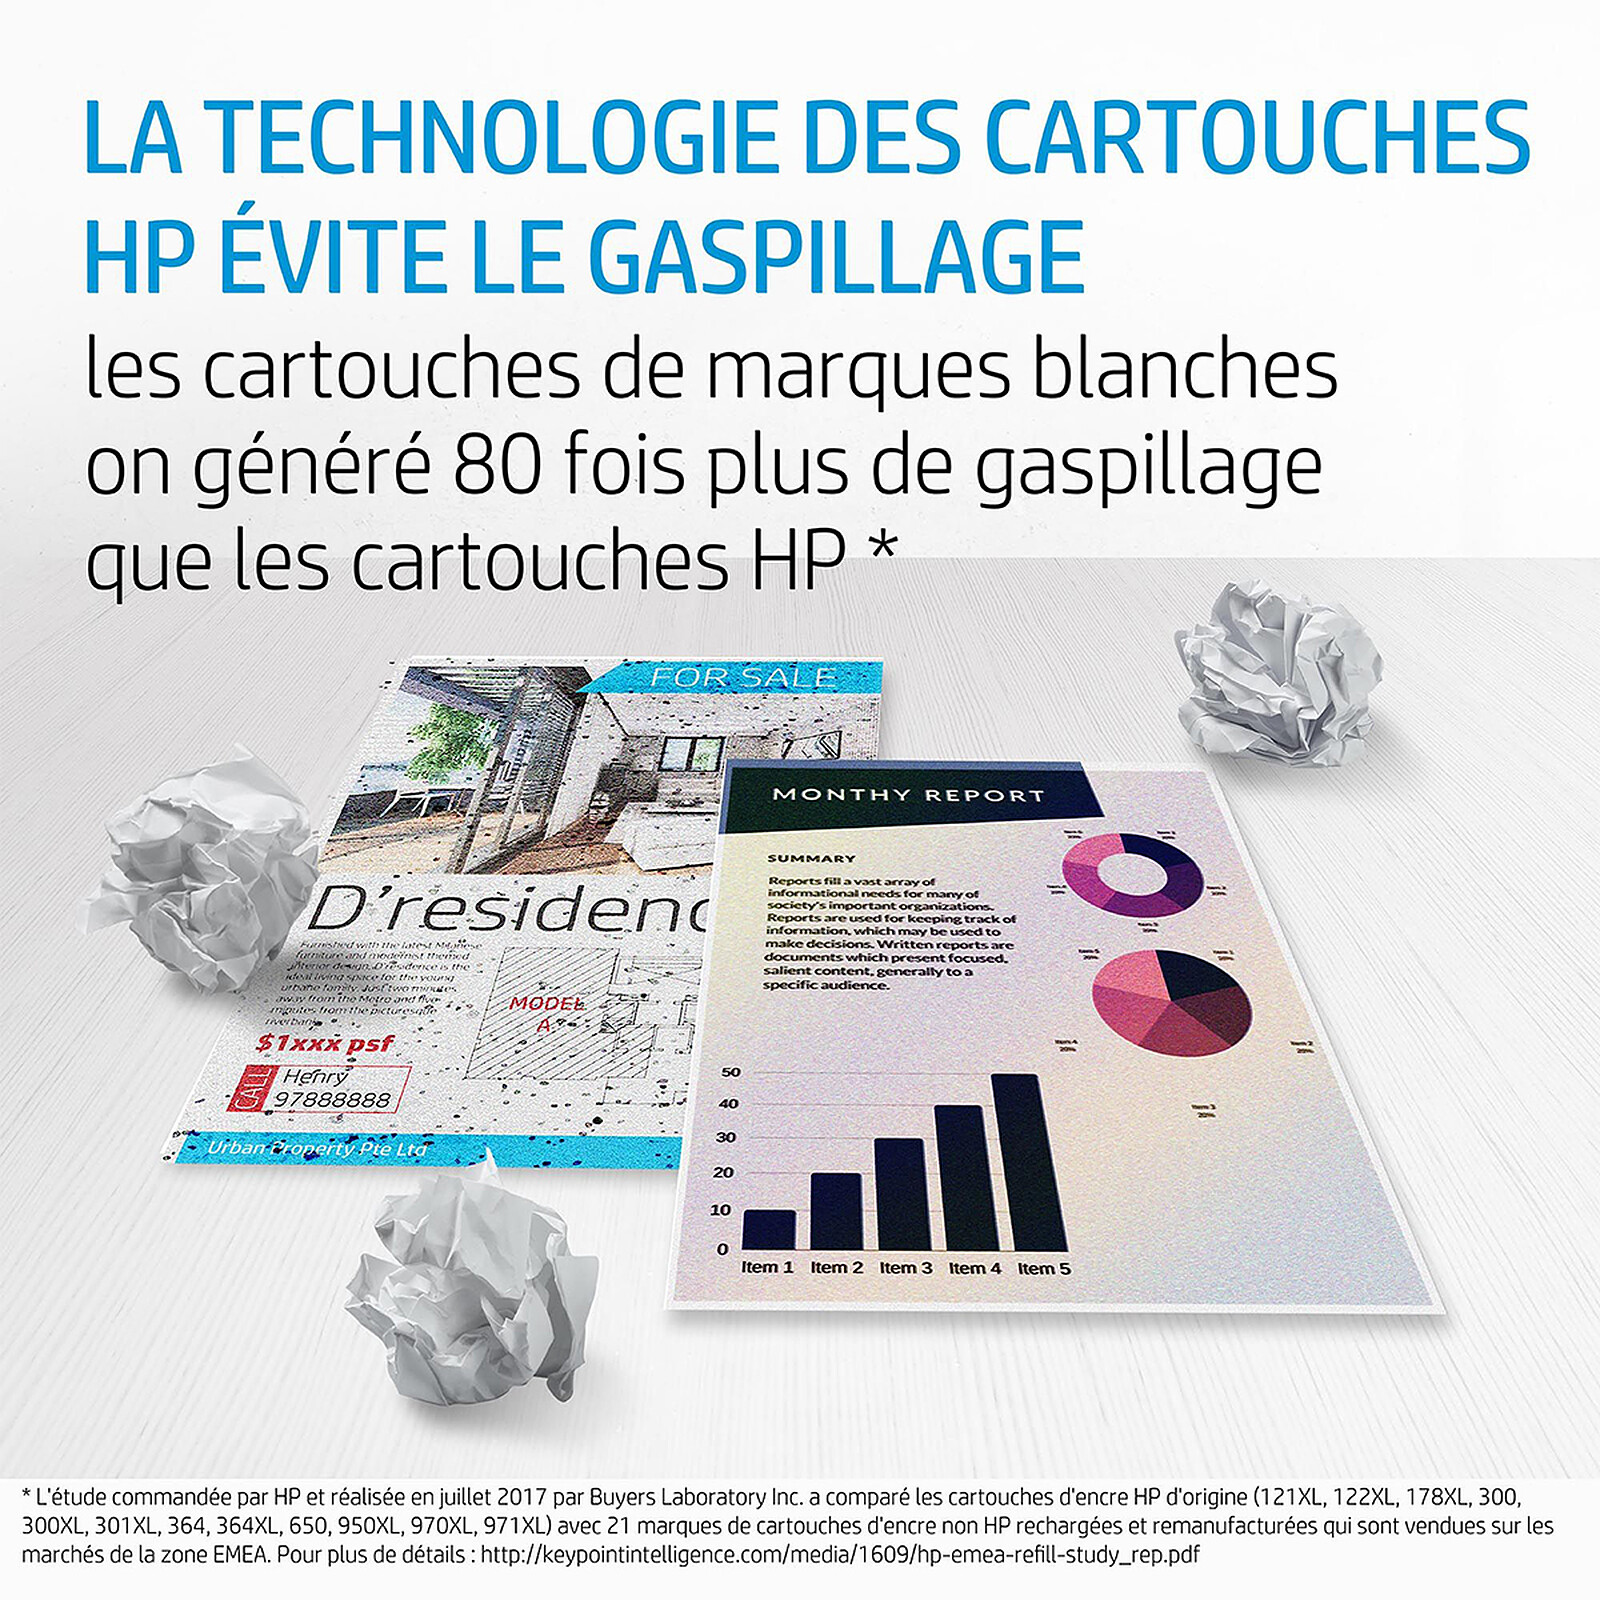 HP 963 Cartouches Pack Combiné - Coolblue - avant 23:59, demain